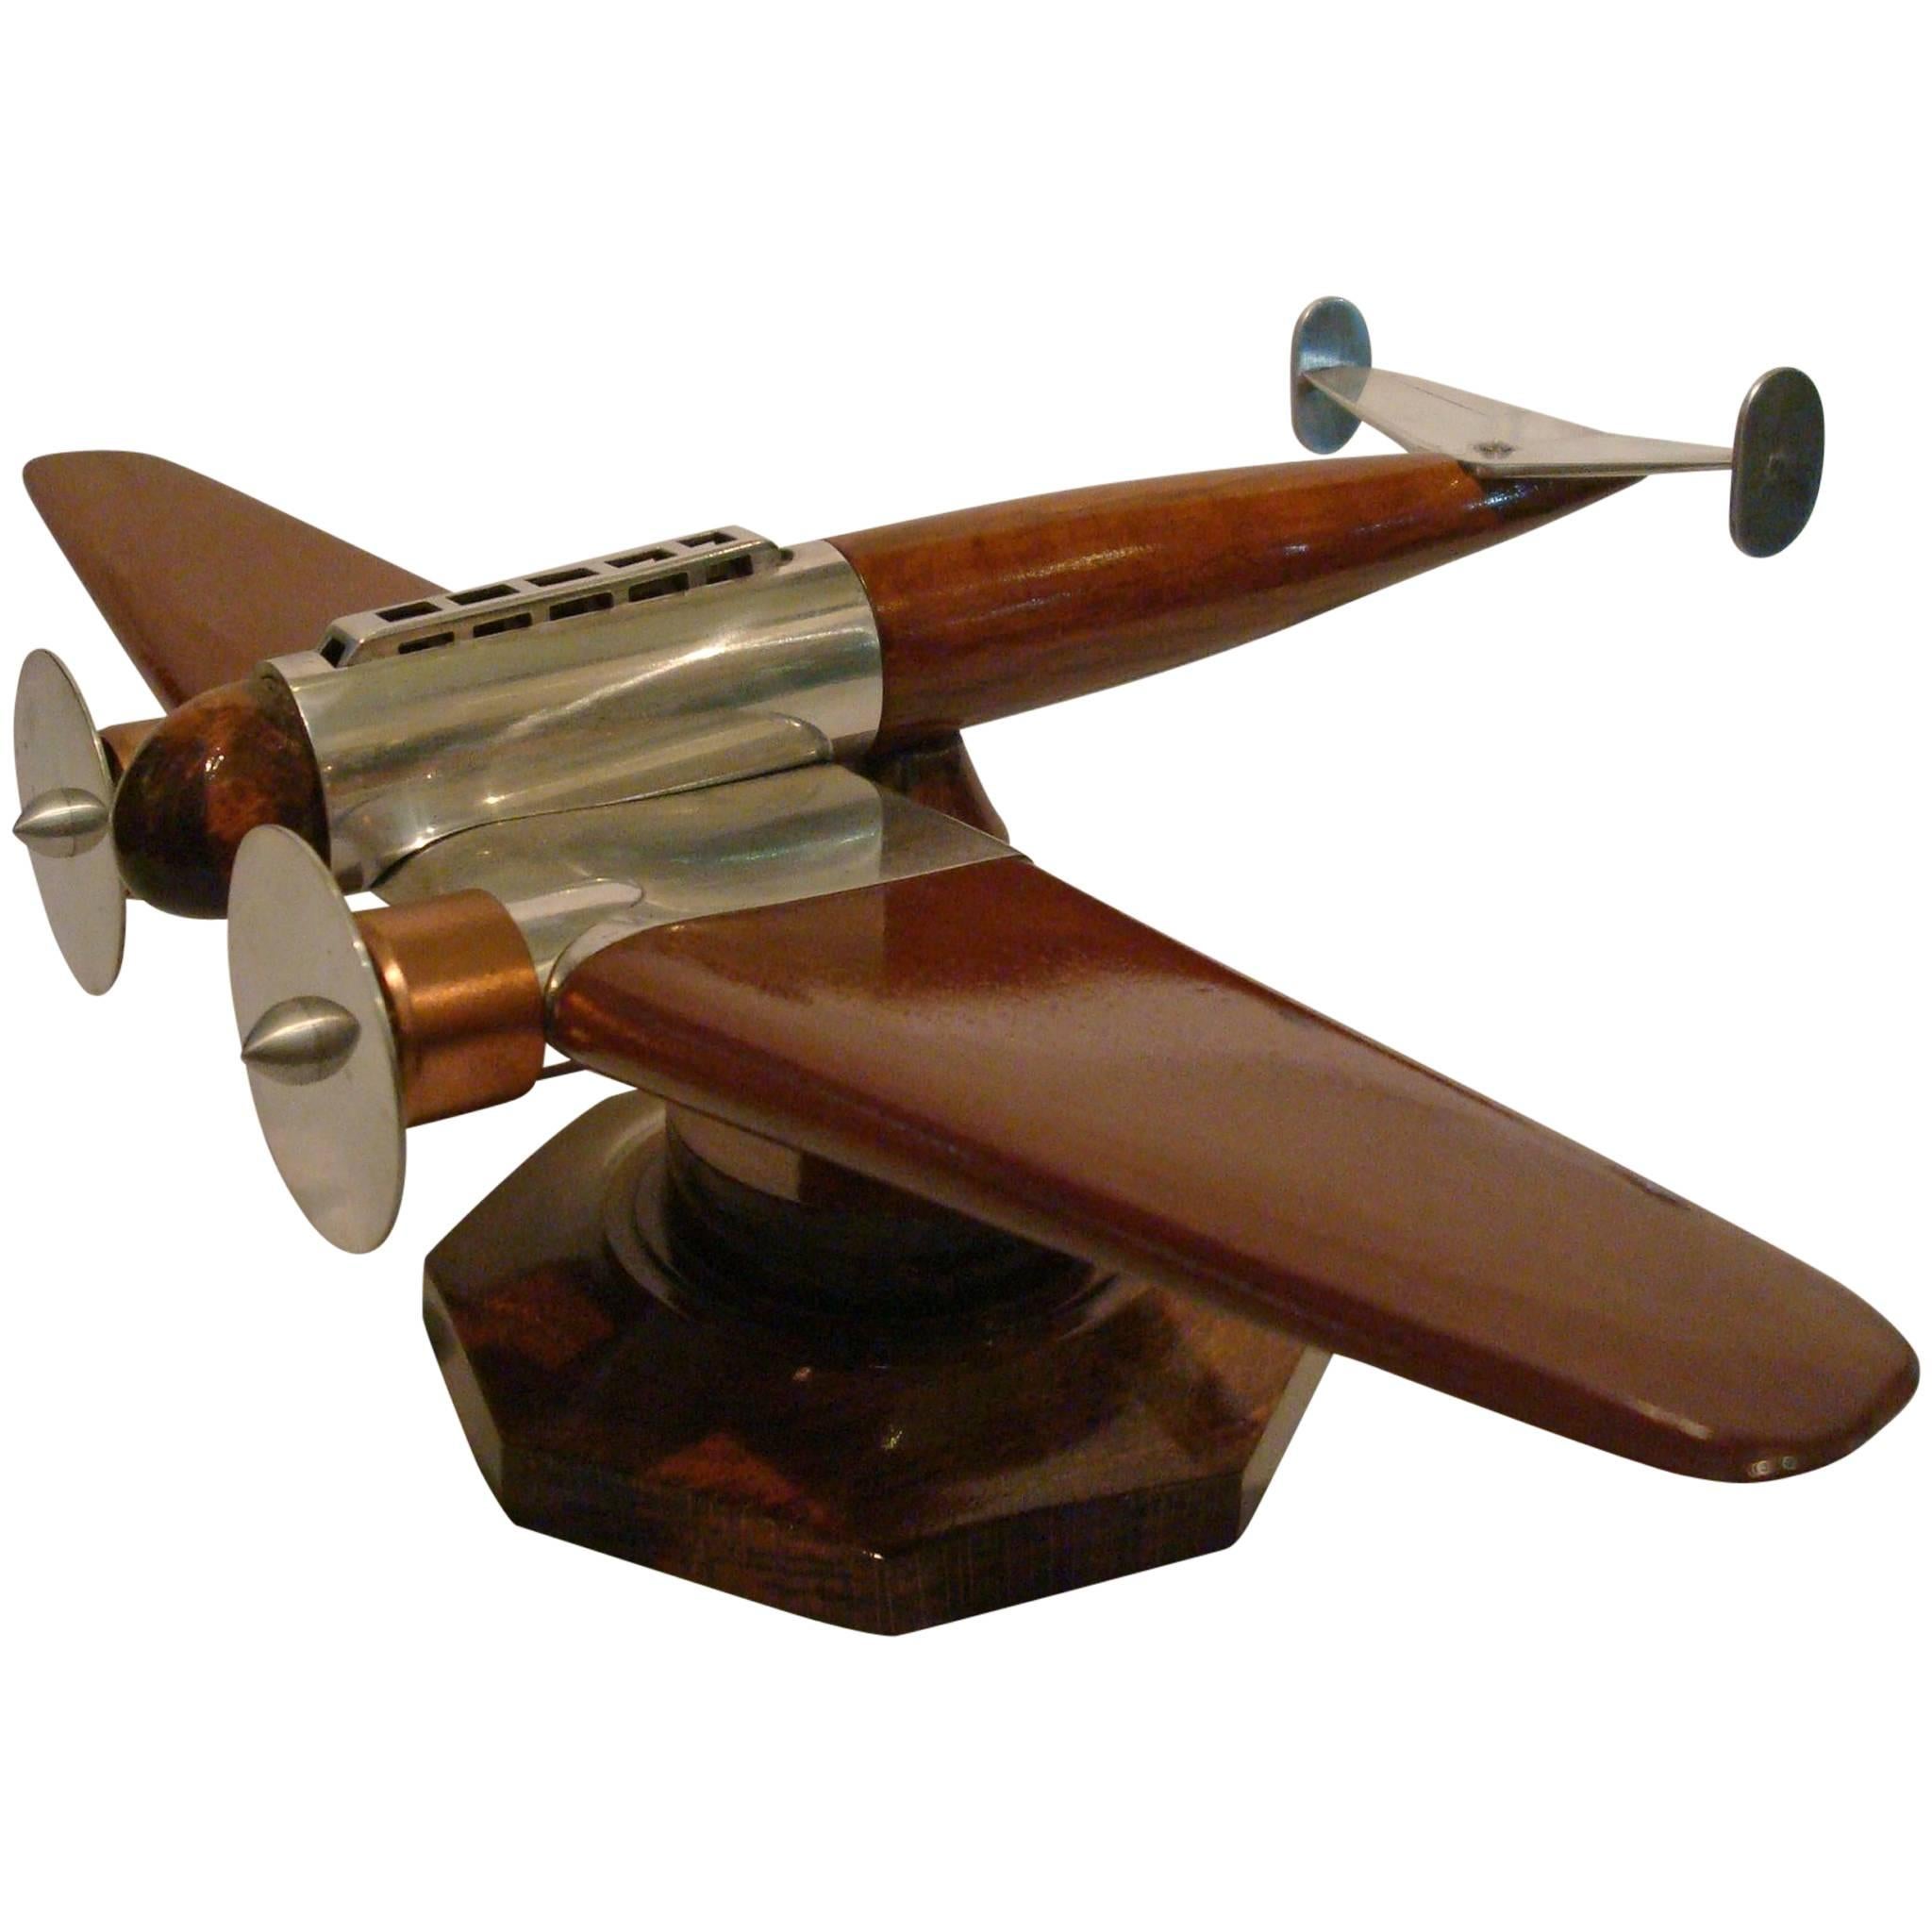 Art Deco Airplane Desk Model, France, 1930s